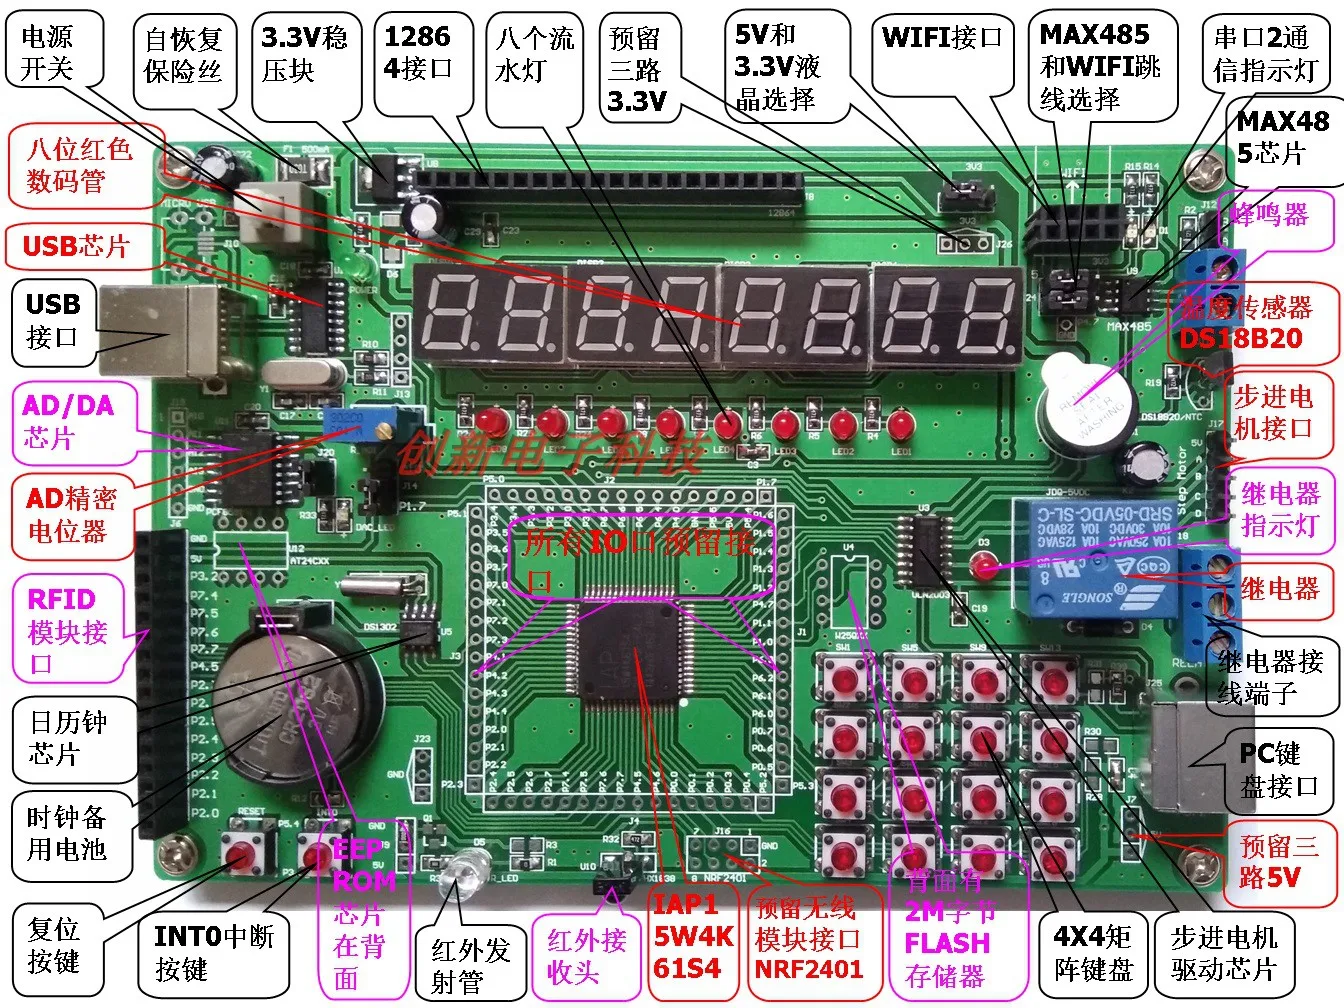 51-single-chip-microcomputer-iap-stc-15-series-development-board-experiment-board-iap15w4k61s4